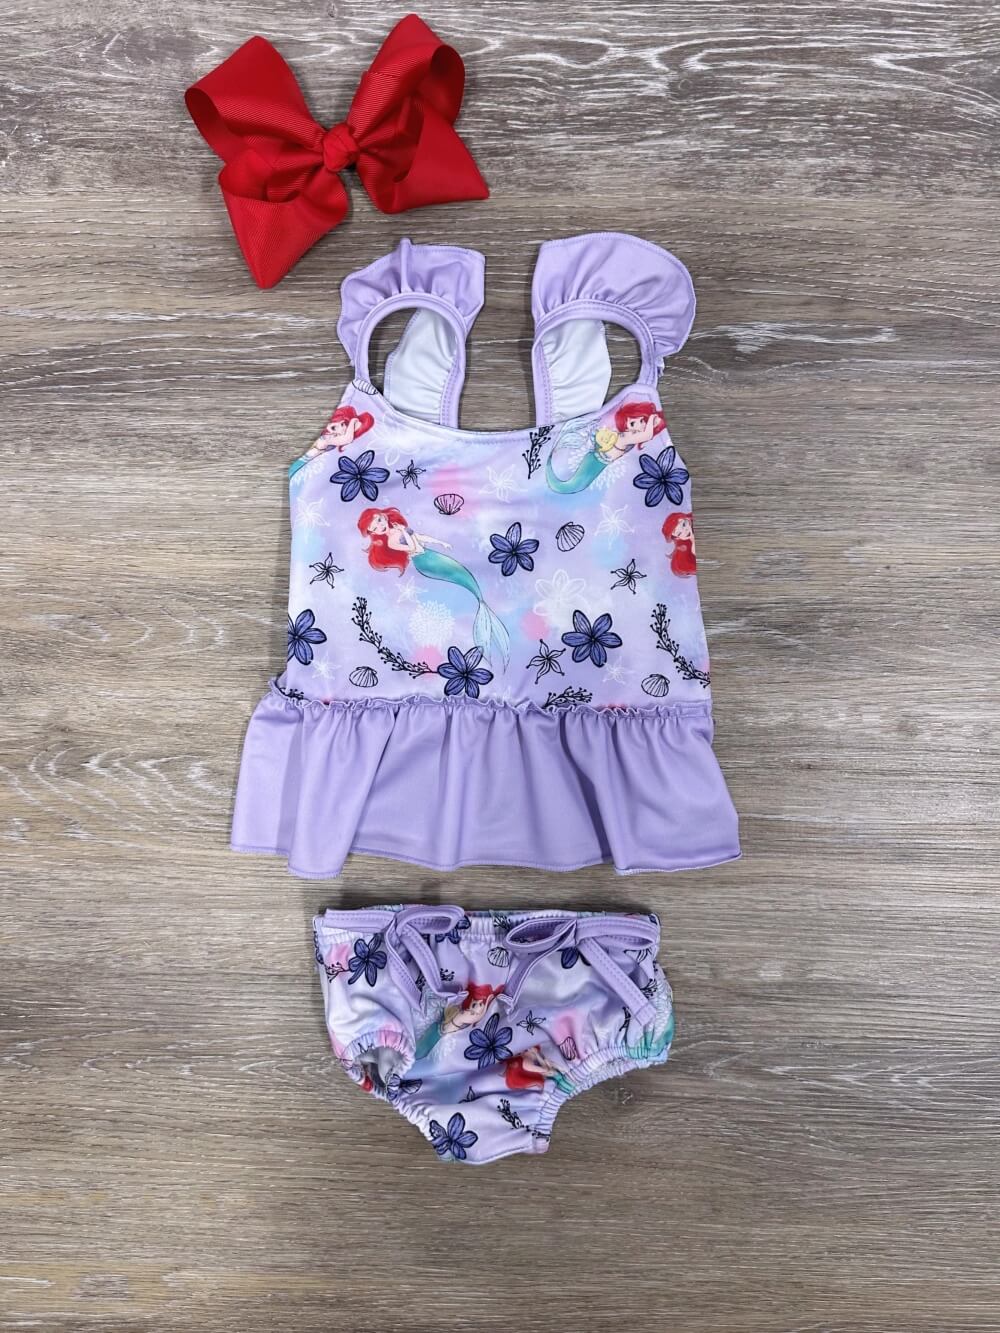 Magical Mermaid Lavender Girls Tankini Swimsuit - Sydney So Sweet